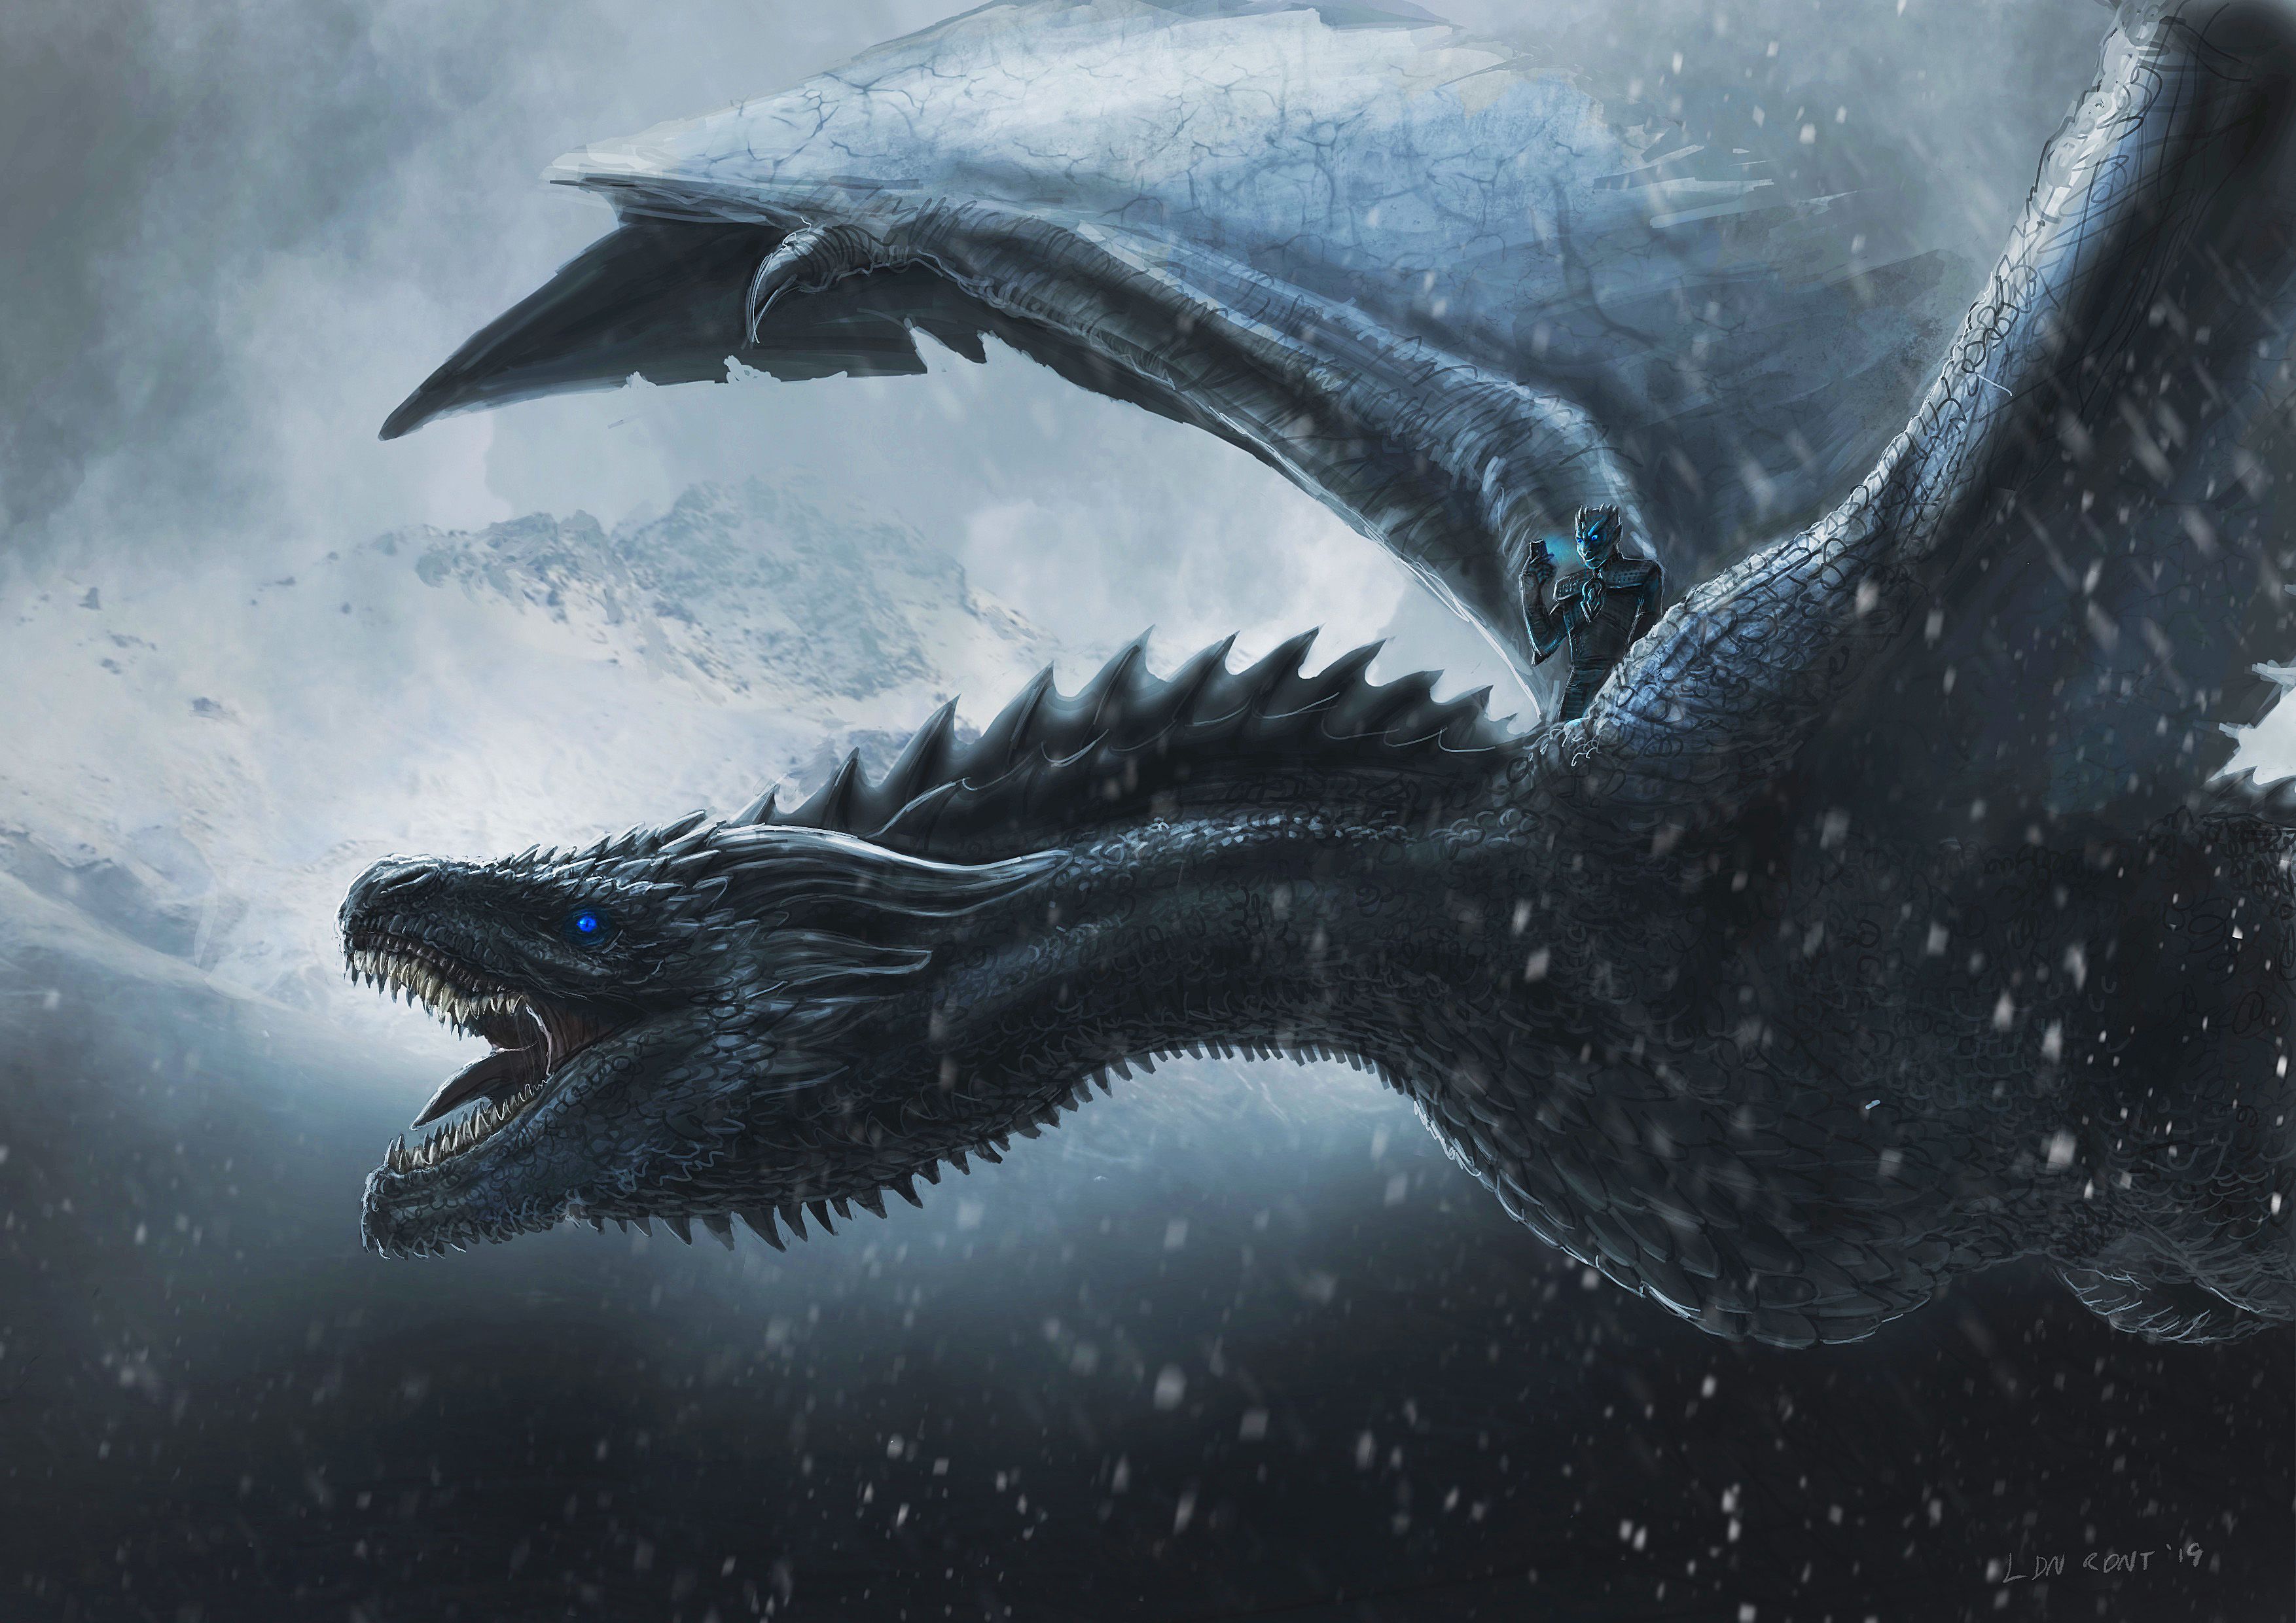 Night King Dragon Art Wallpaper, HD Artist 4K Wallpaper, Image, Photo and Background. Dragon art, Game of thrones dragons, Ice dragon